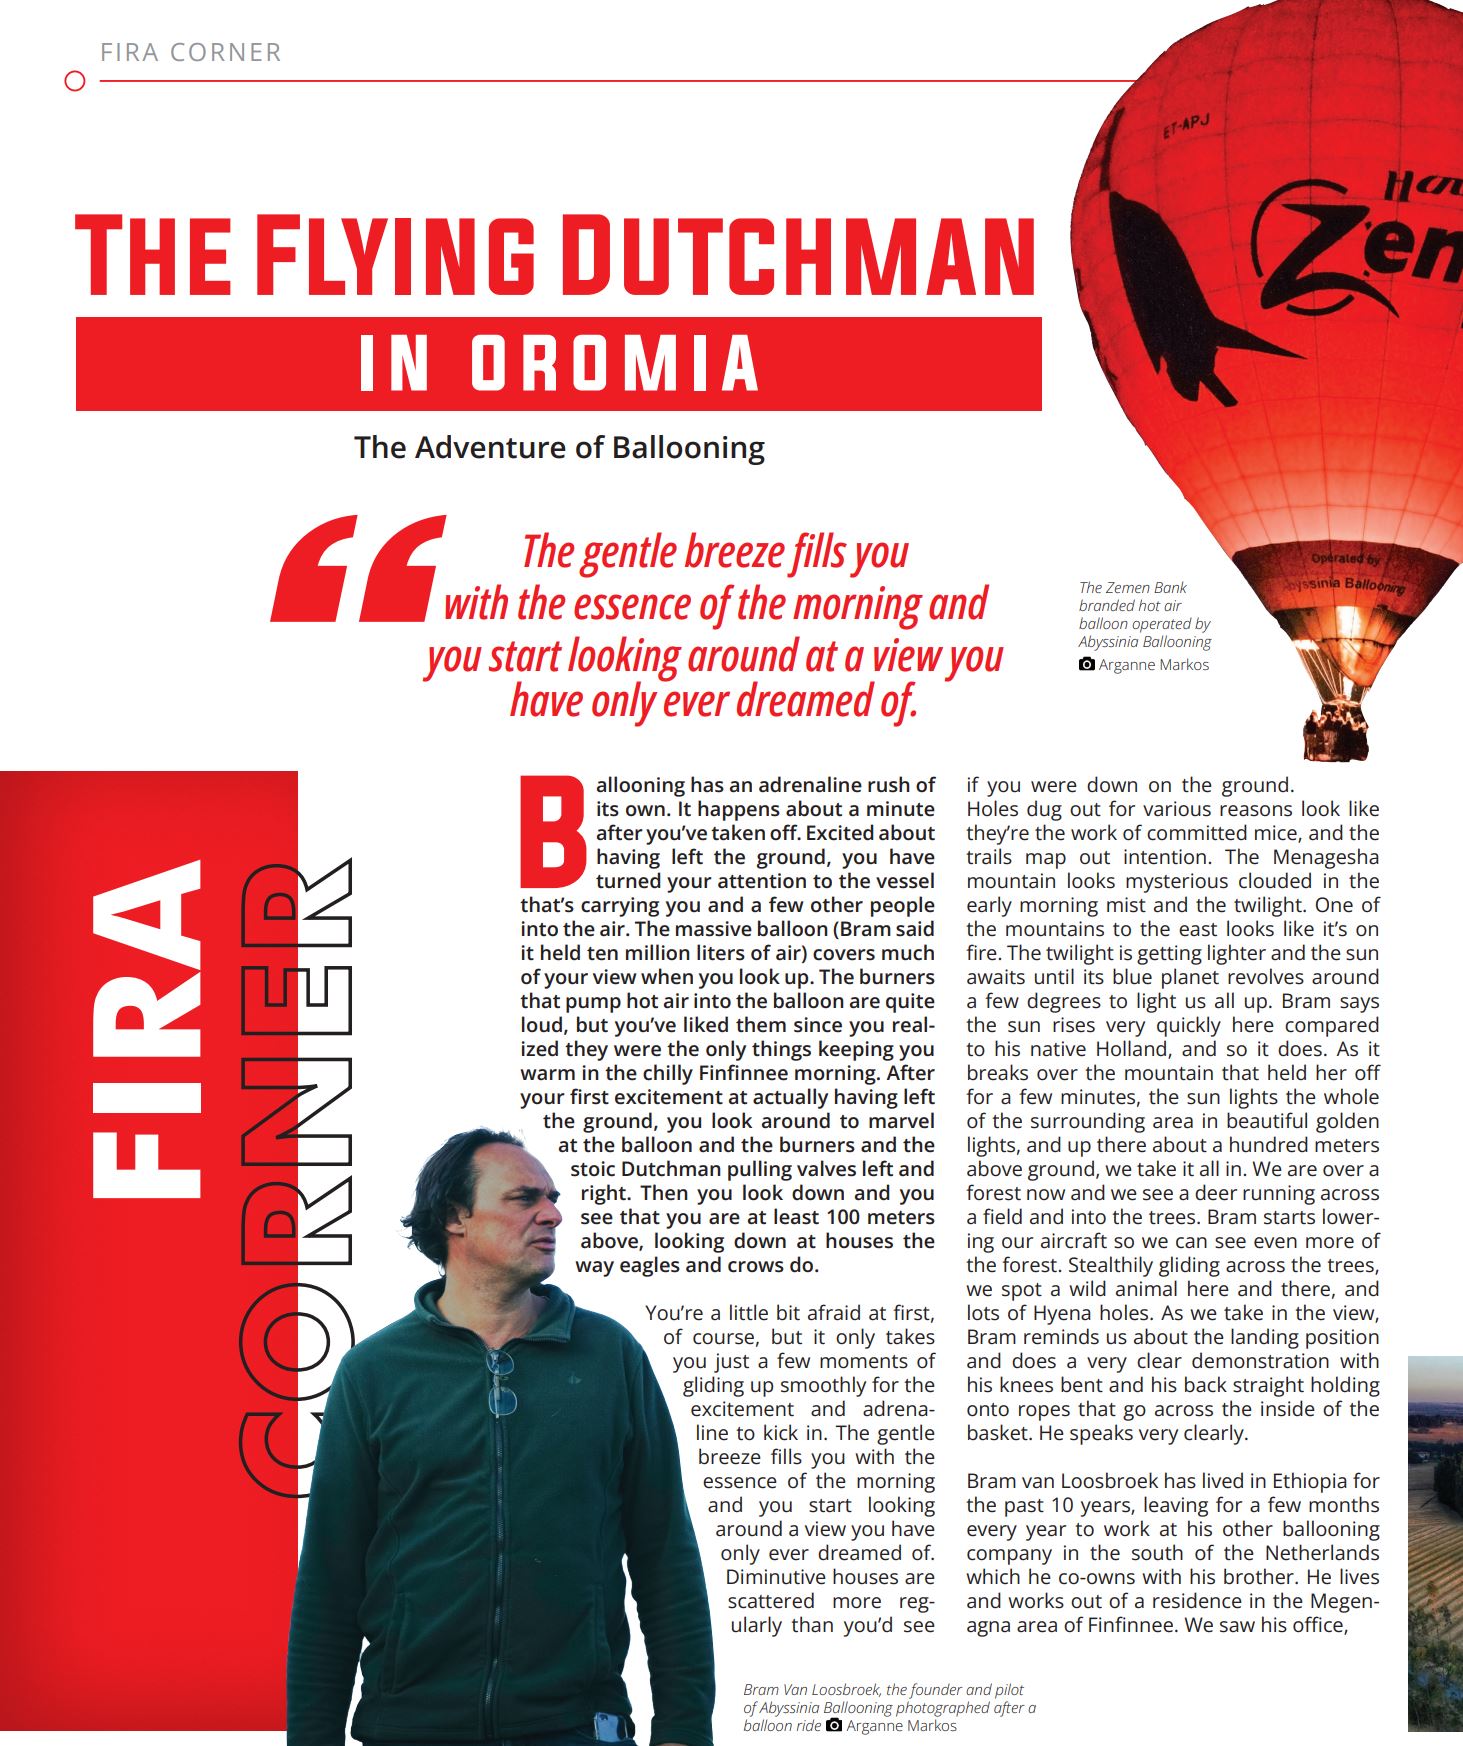 The Flying Dutchman in Oromia